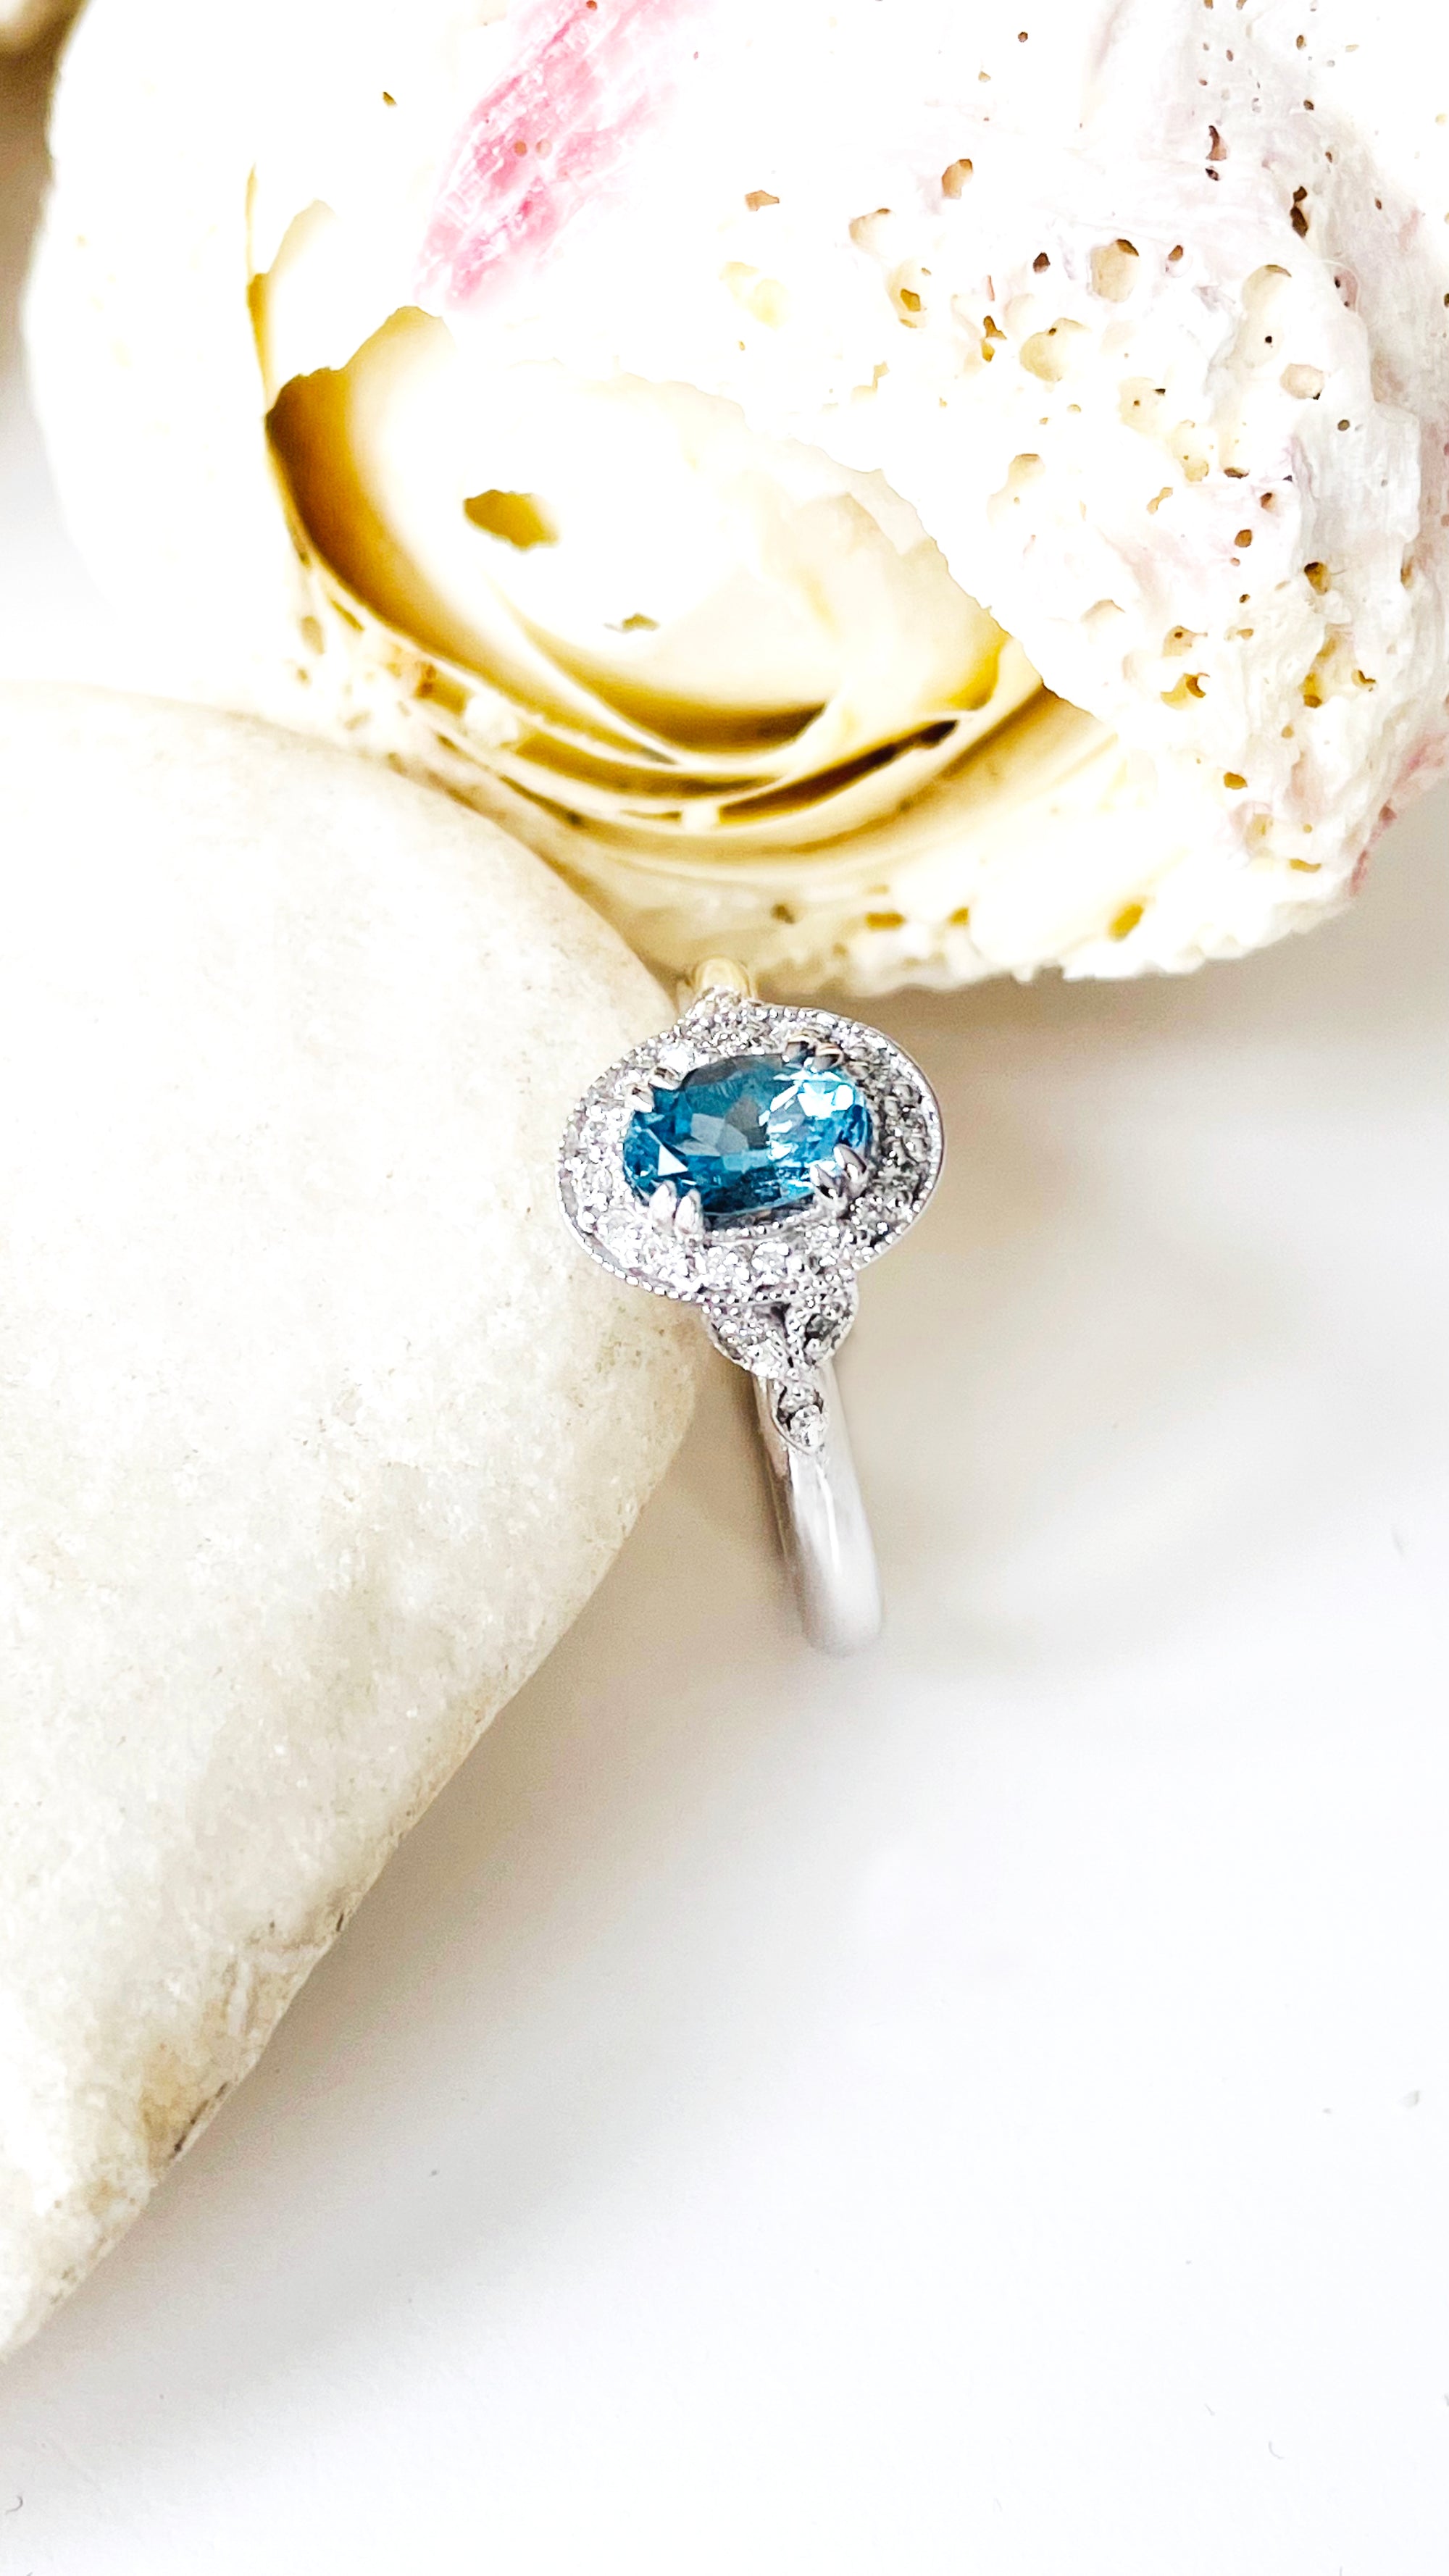 Divinely Decorative Aquamarine and Diamond White Gold Ring